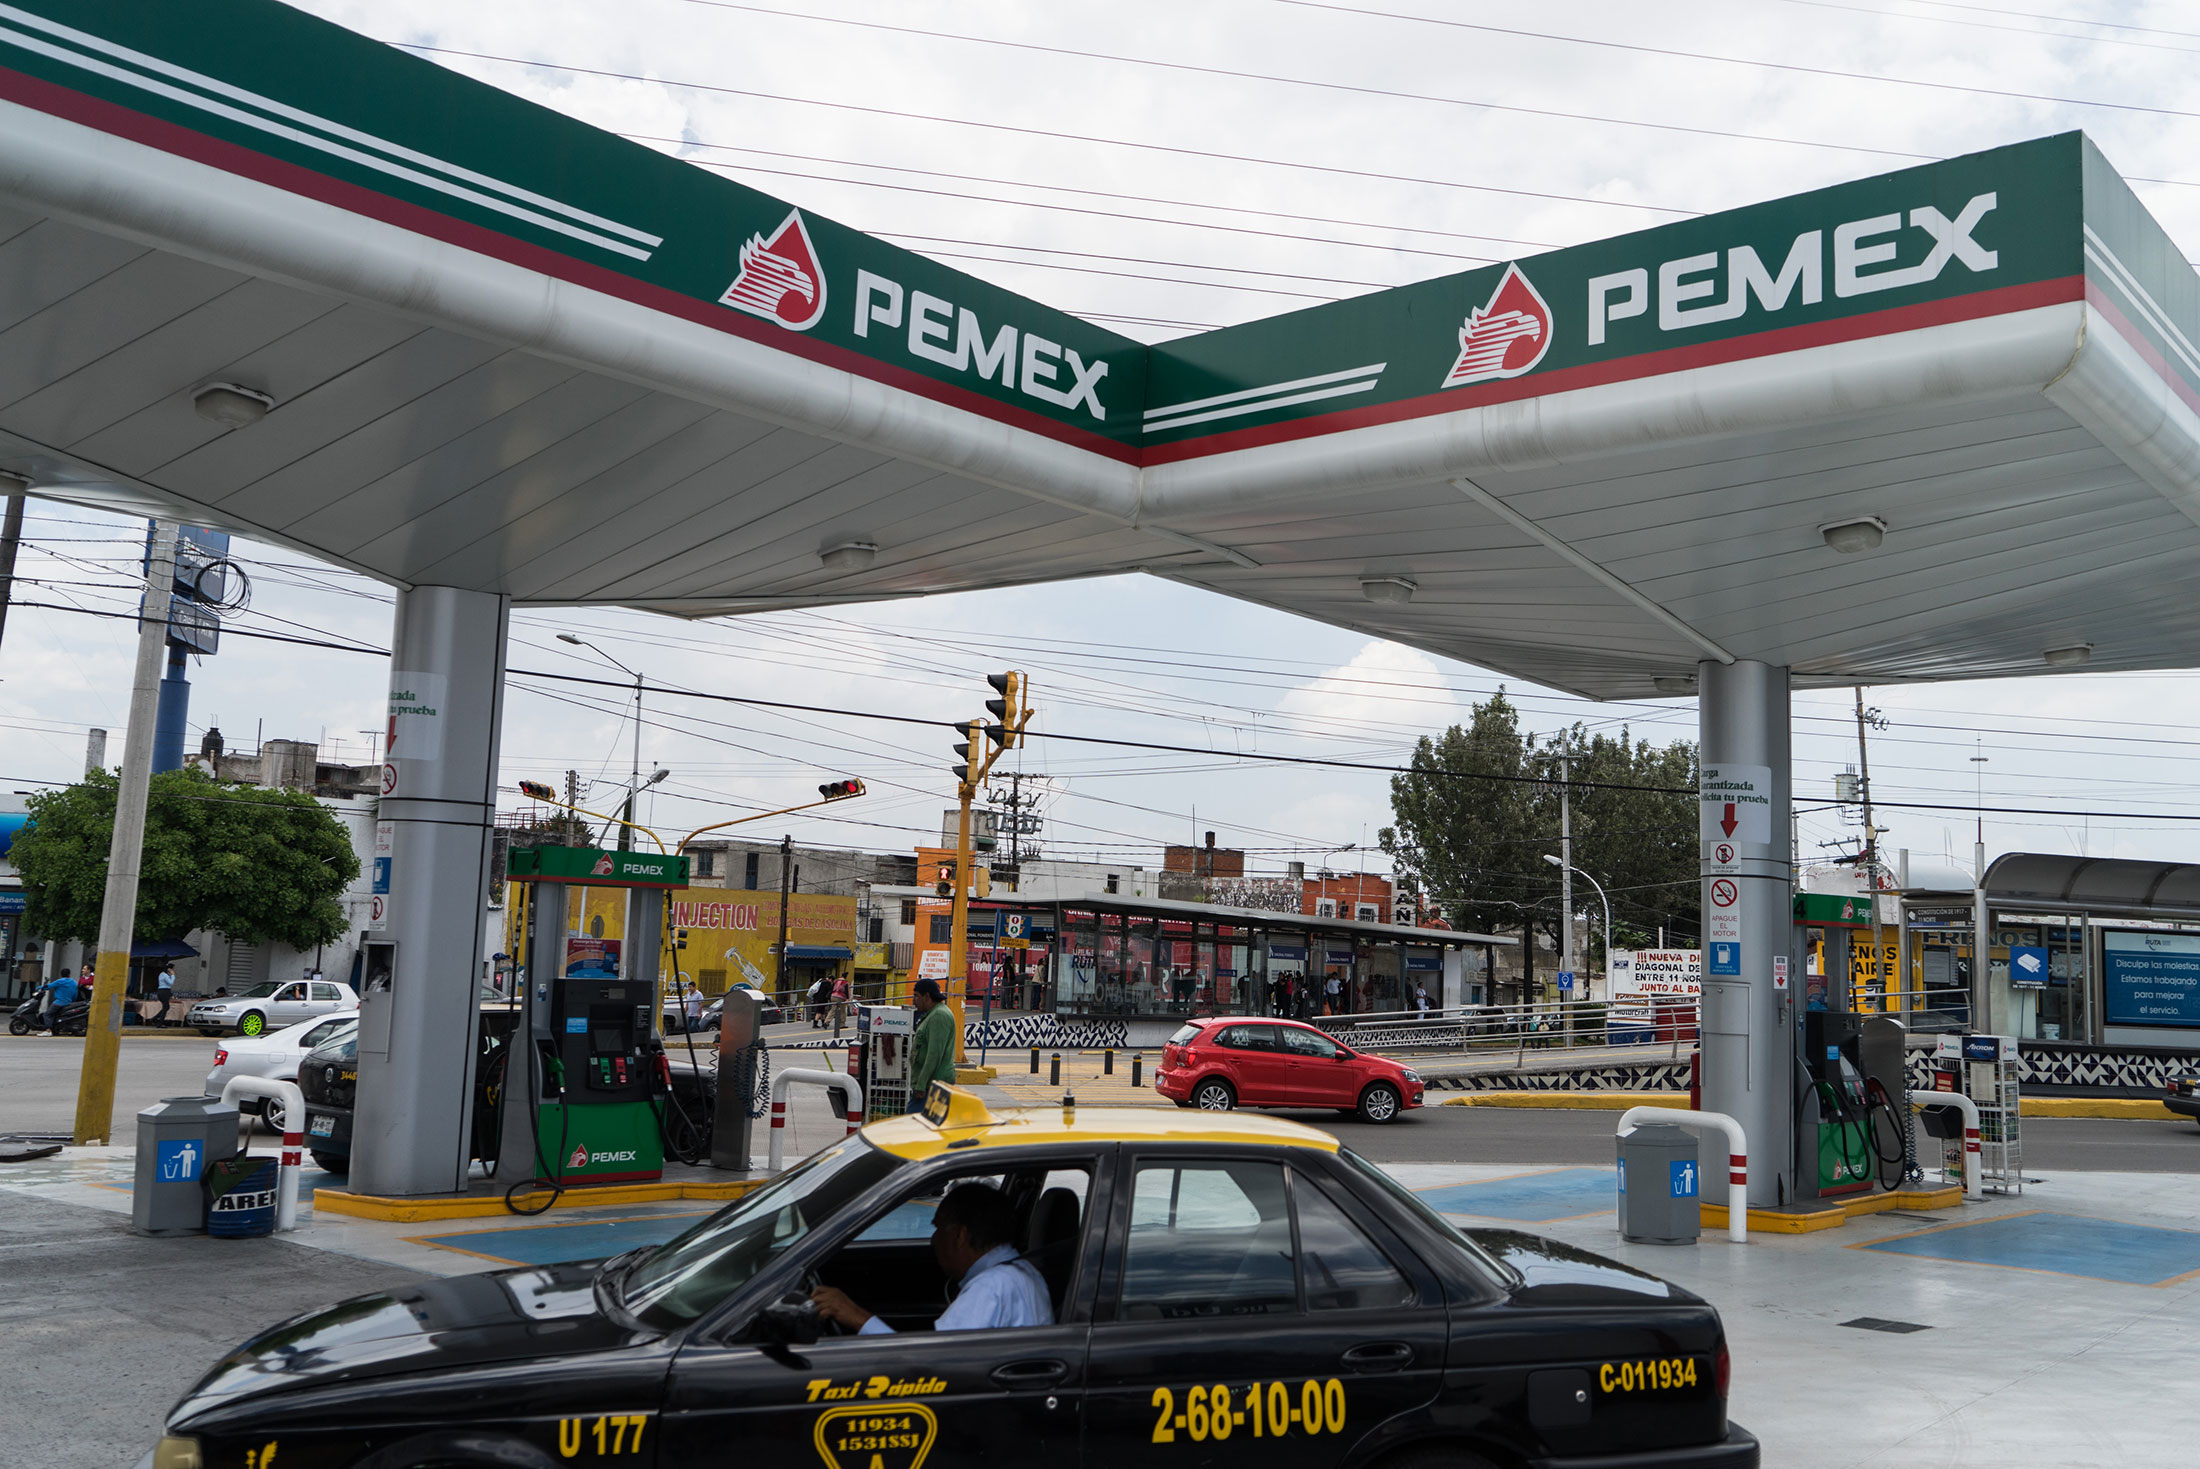 A taxi cab exits a Petroleos Mexicanos (Pemex) gas station in the city of Puebla.